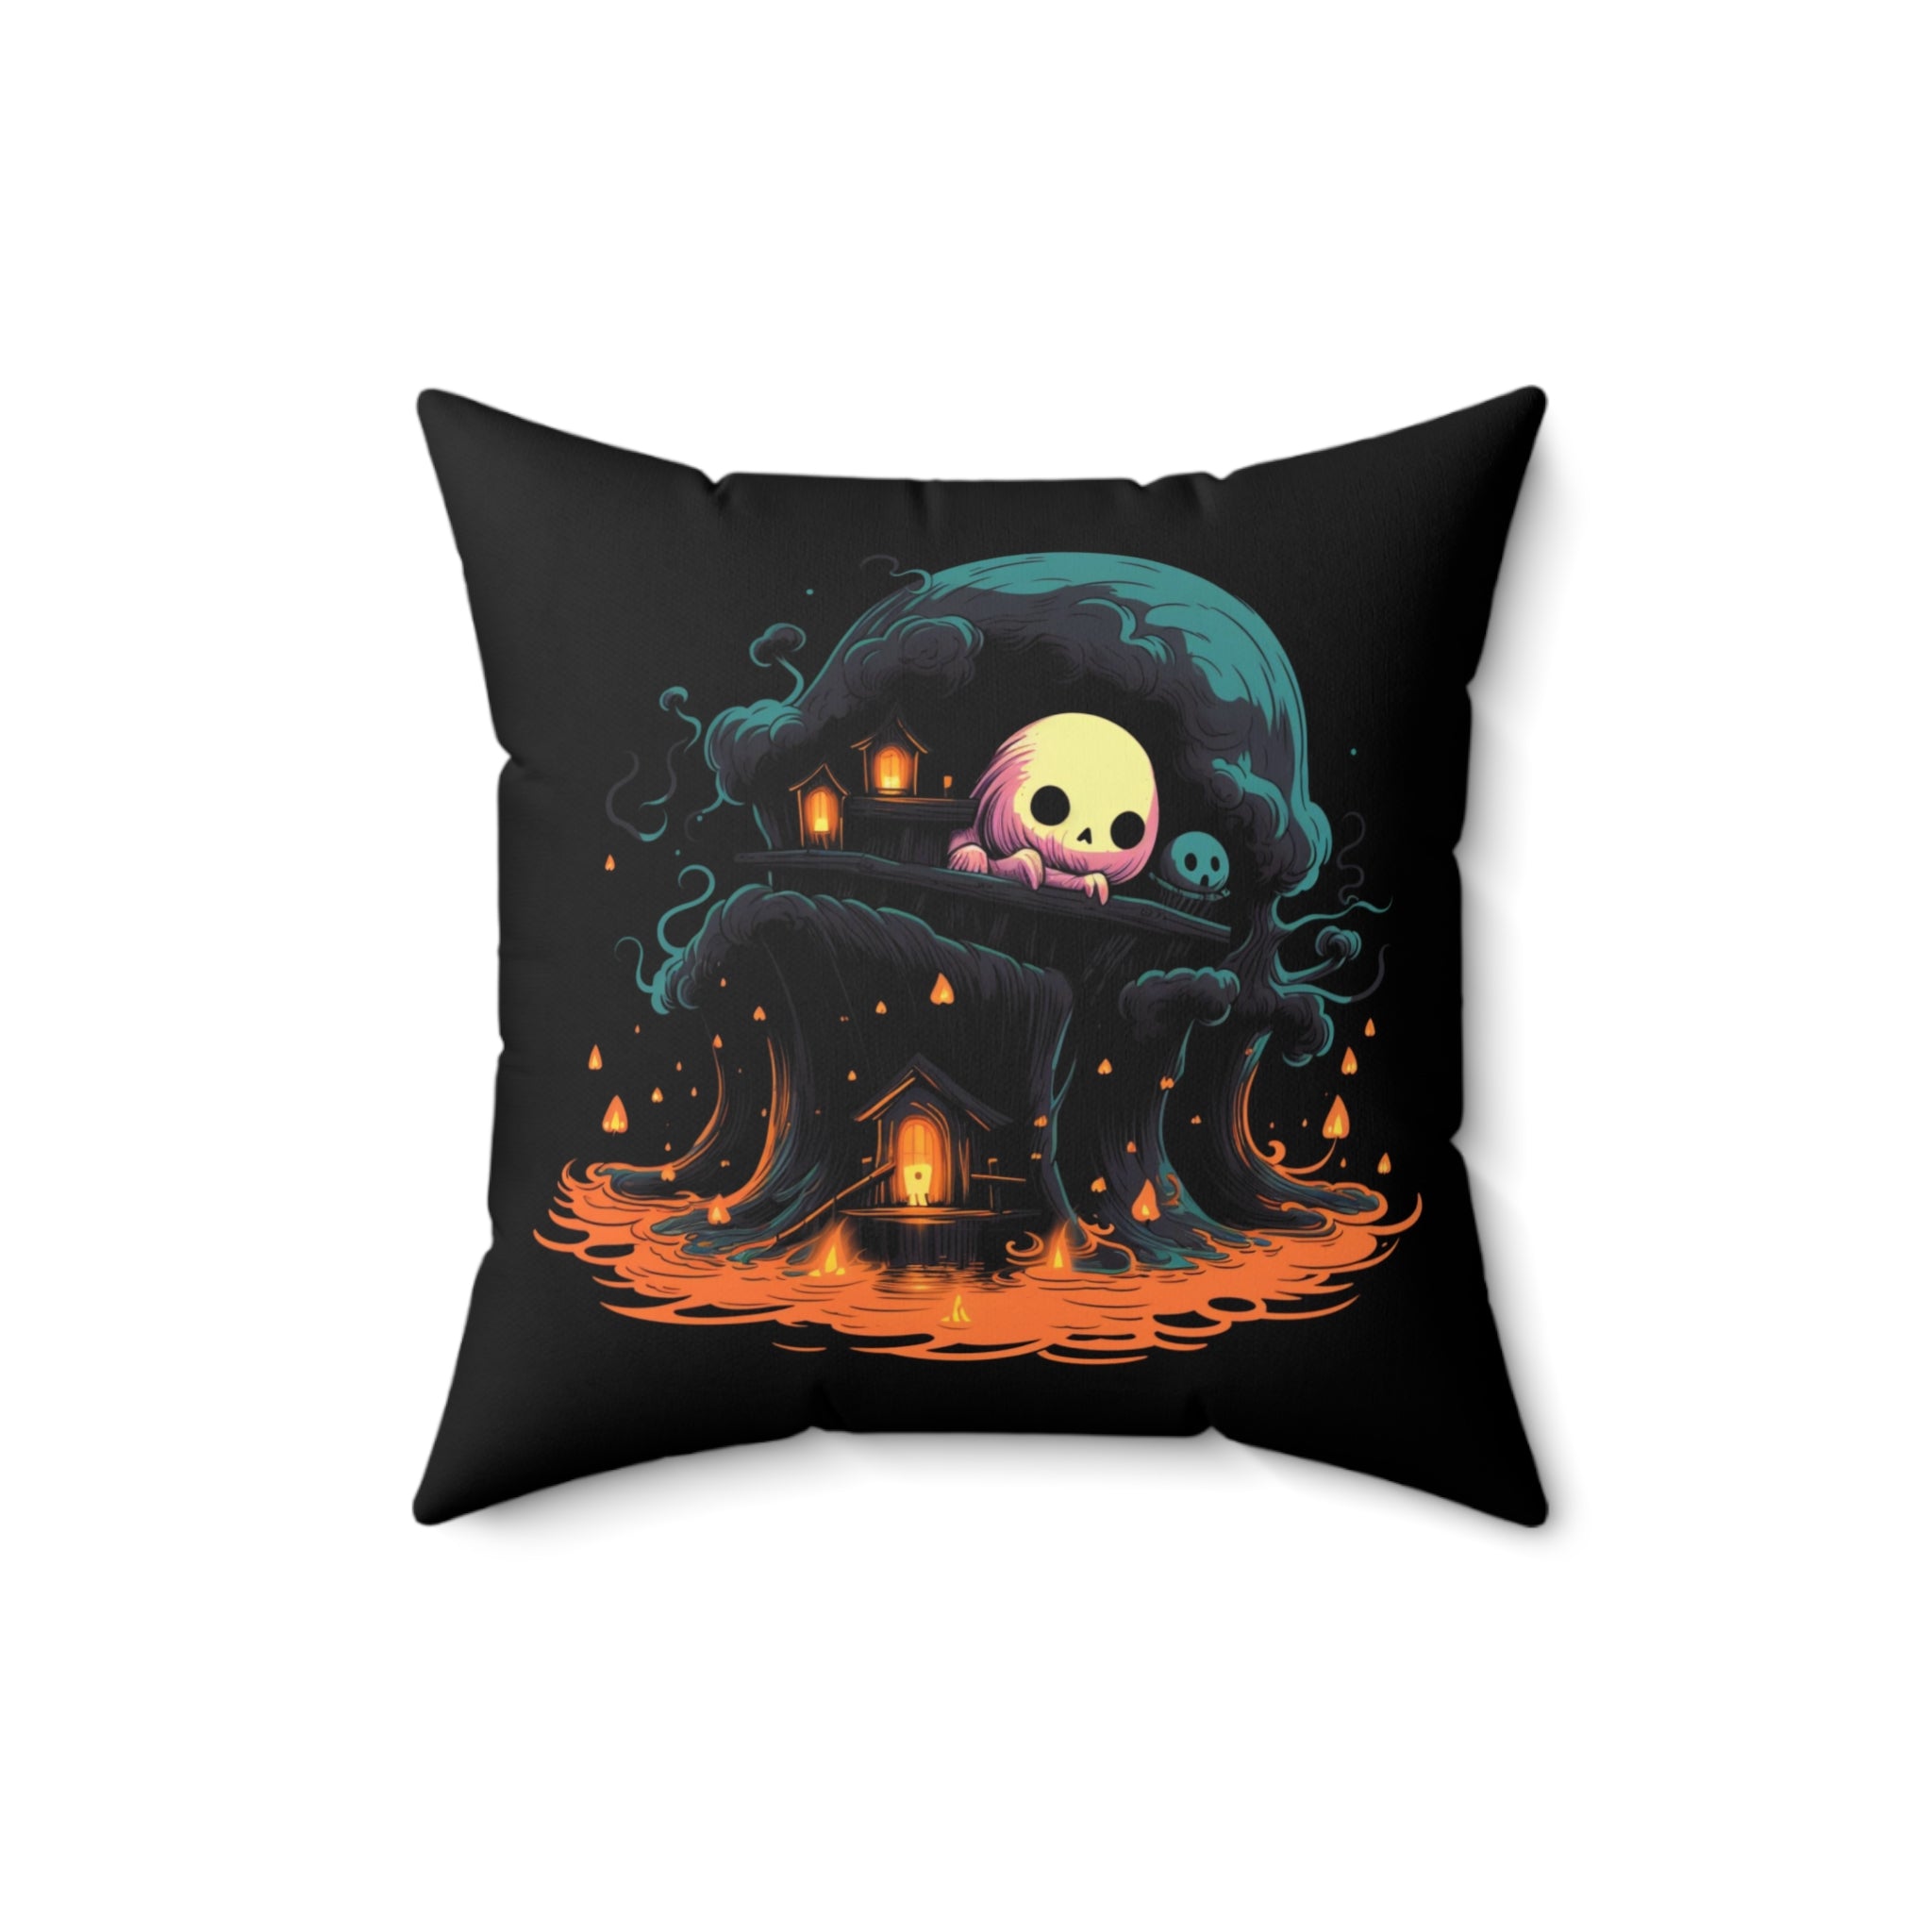 A Place to Hide | Pillow Cover | Spooky Pillow | Halloween Pillow | Cute Spooky Home Décor | Spun Polyester Square Pillow